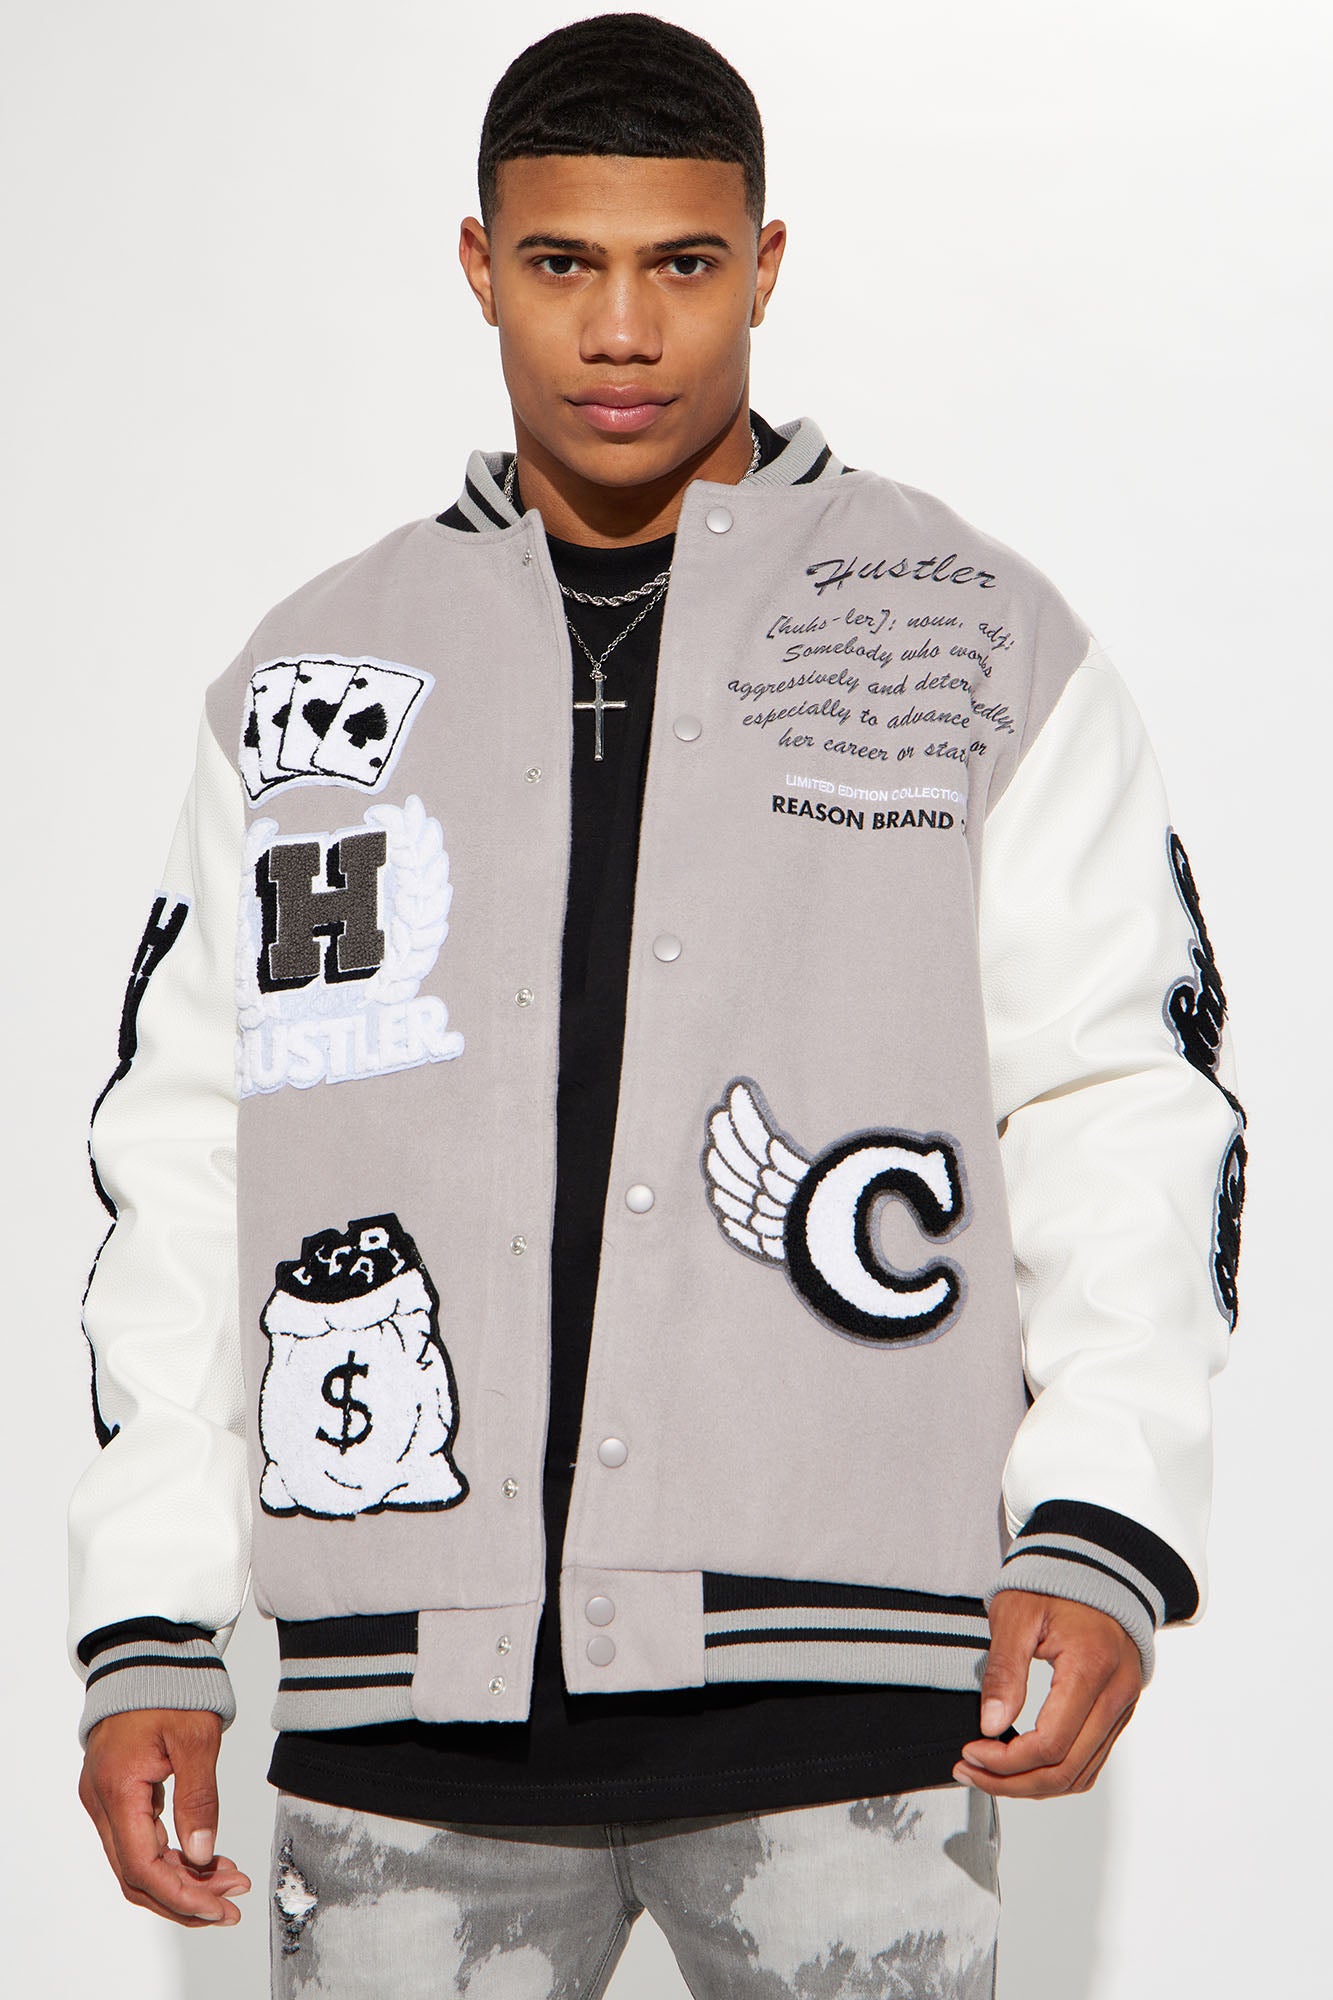 Mens PU Leather Baseball Jacket Hip Hop Flocked Embroidery Letters  Patchwork Varsity Jackets Oversize Coat Unisex Streetwear New - AliExpress